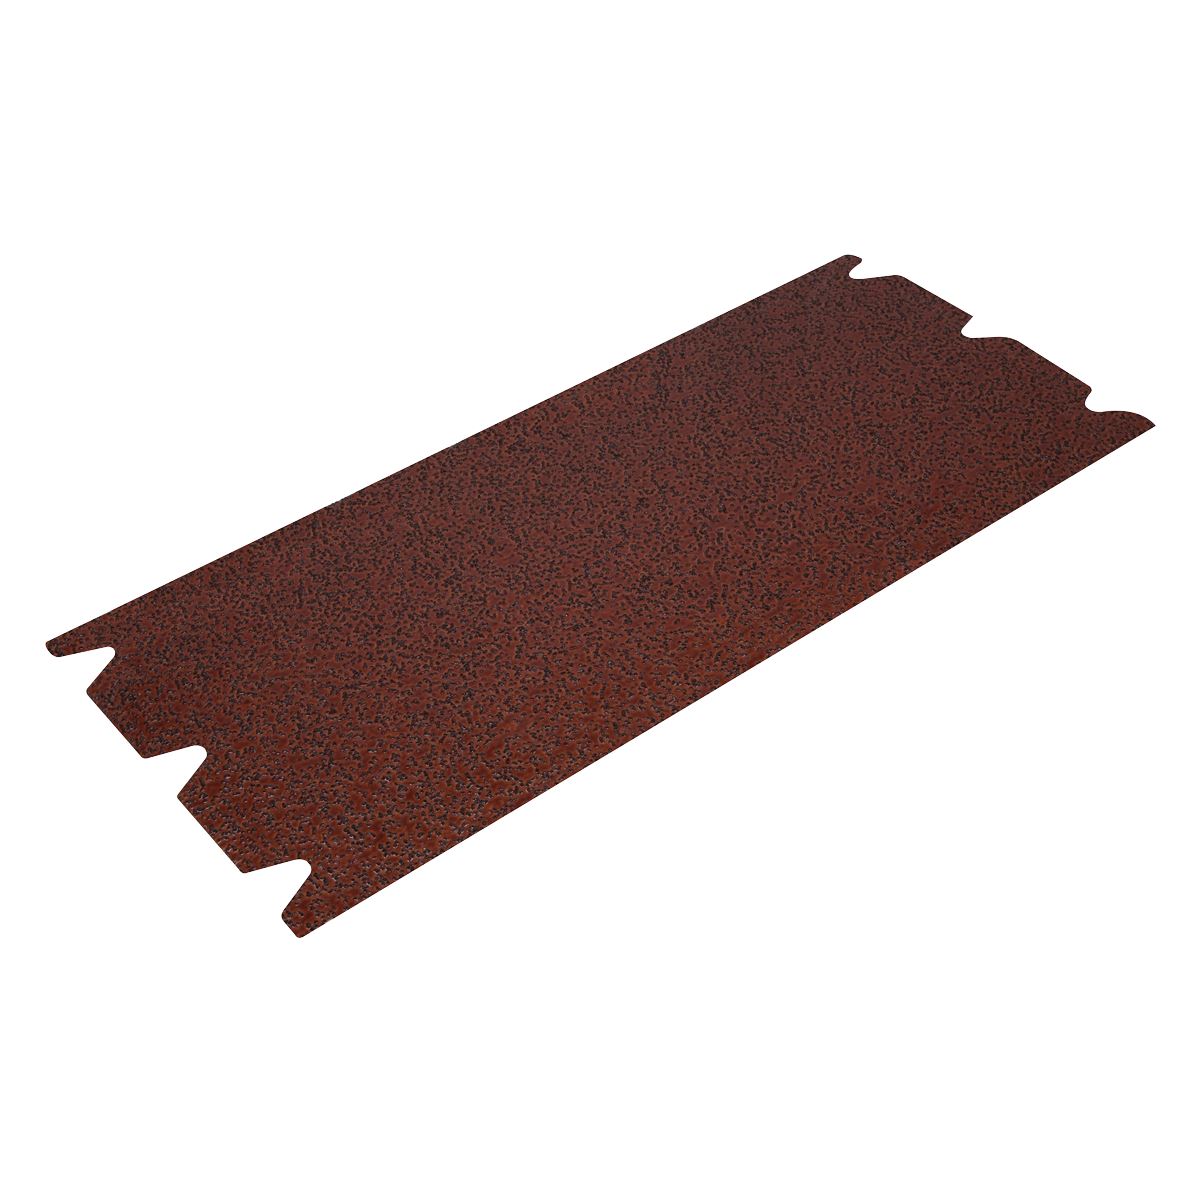 Worksafe by Sealey Floor Sanding Sheet 205 x 470mm 24Grit Open Coat - Pack of 25